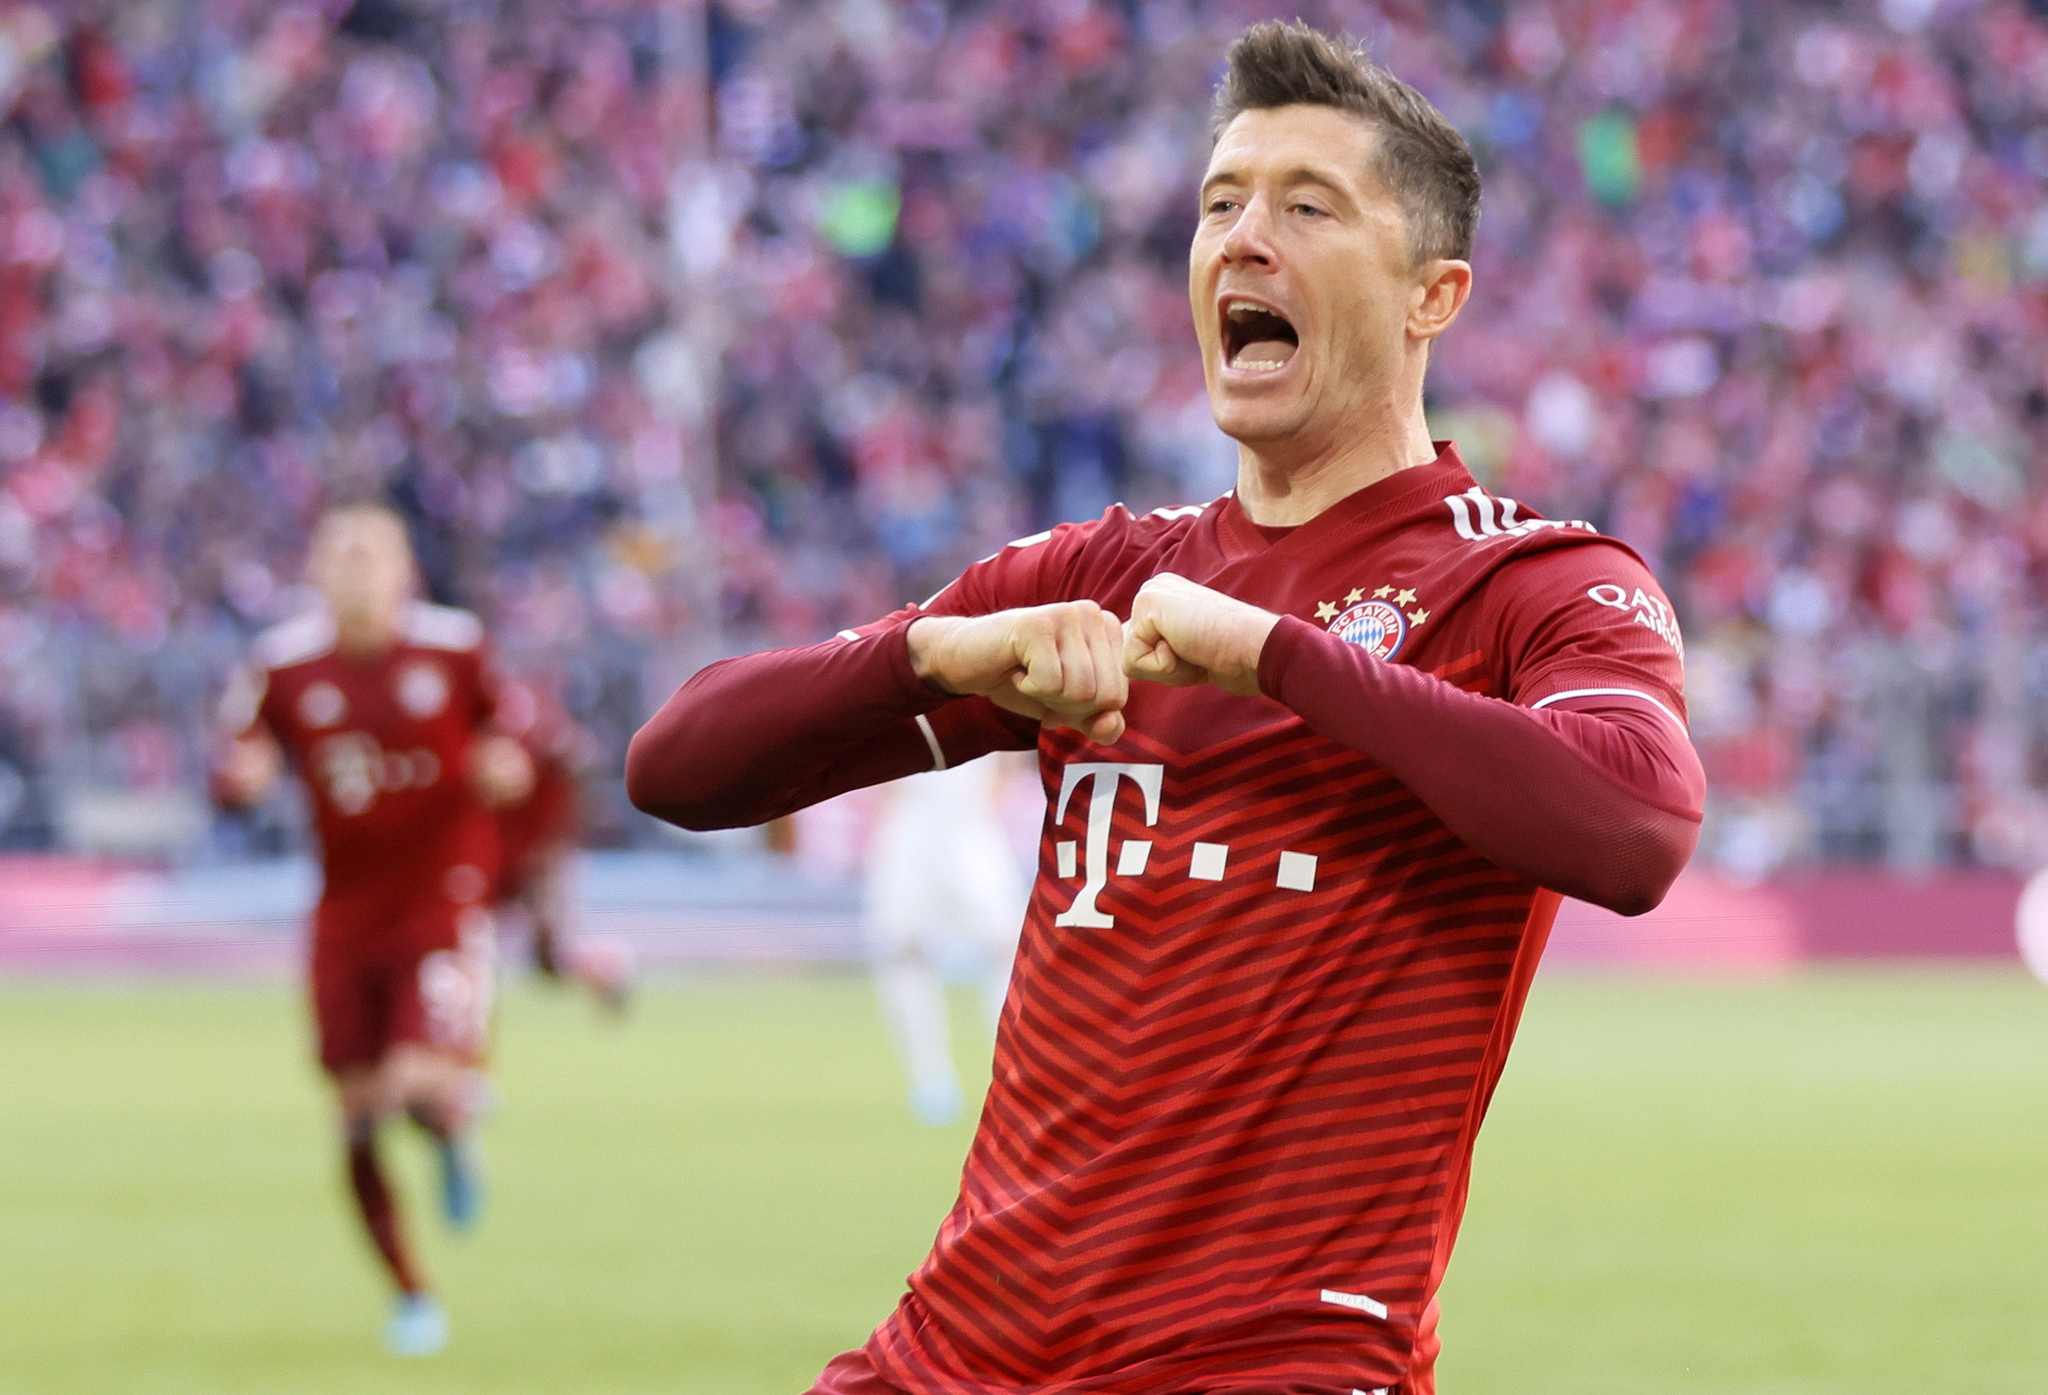 Robert Lewandowski celebra un gol con el Bayern